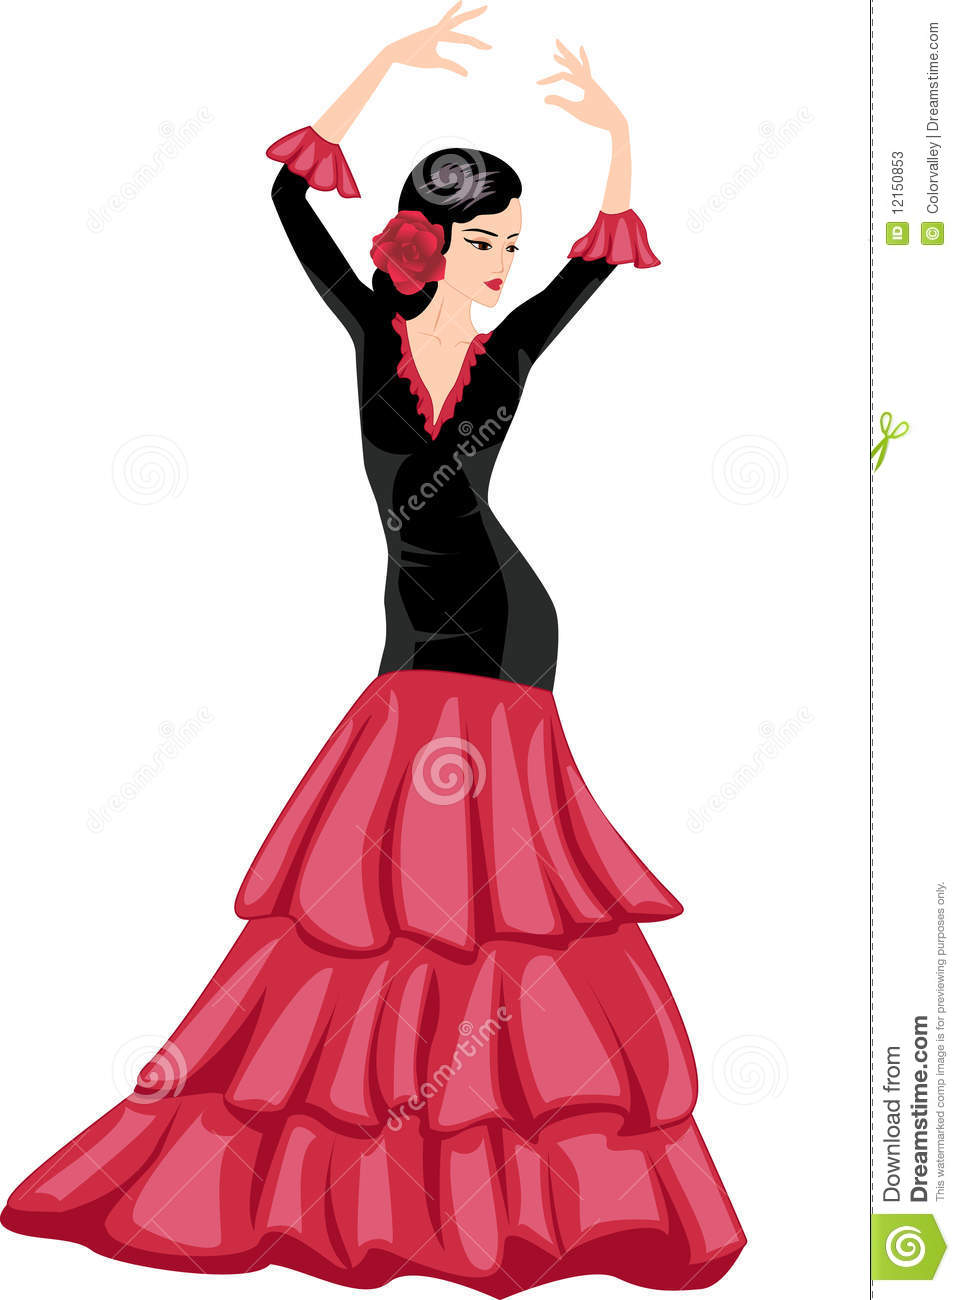 Woman Dancing Spanish Dance Stock Photos   Image  12150853